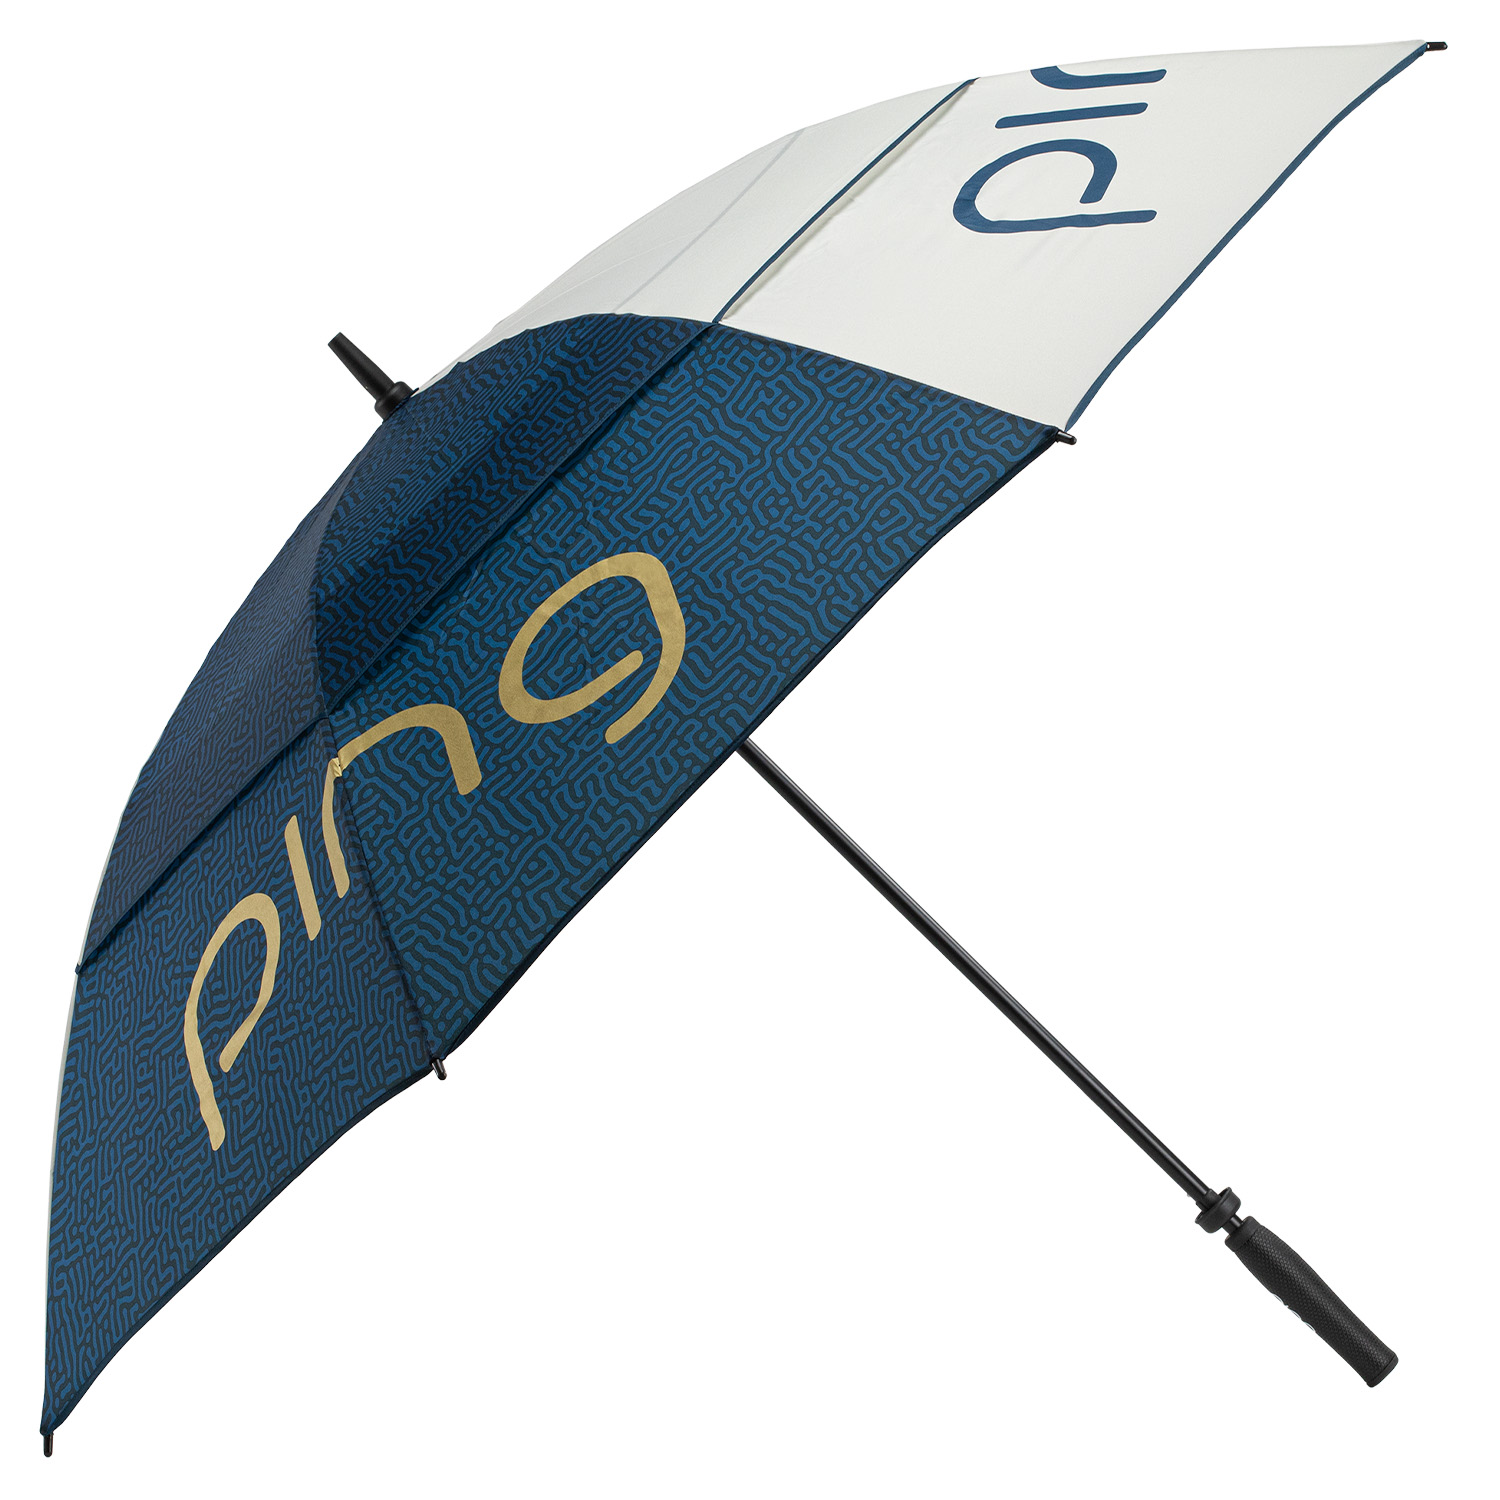 PING G Le3 Double Canopy Golf Umbrella